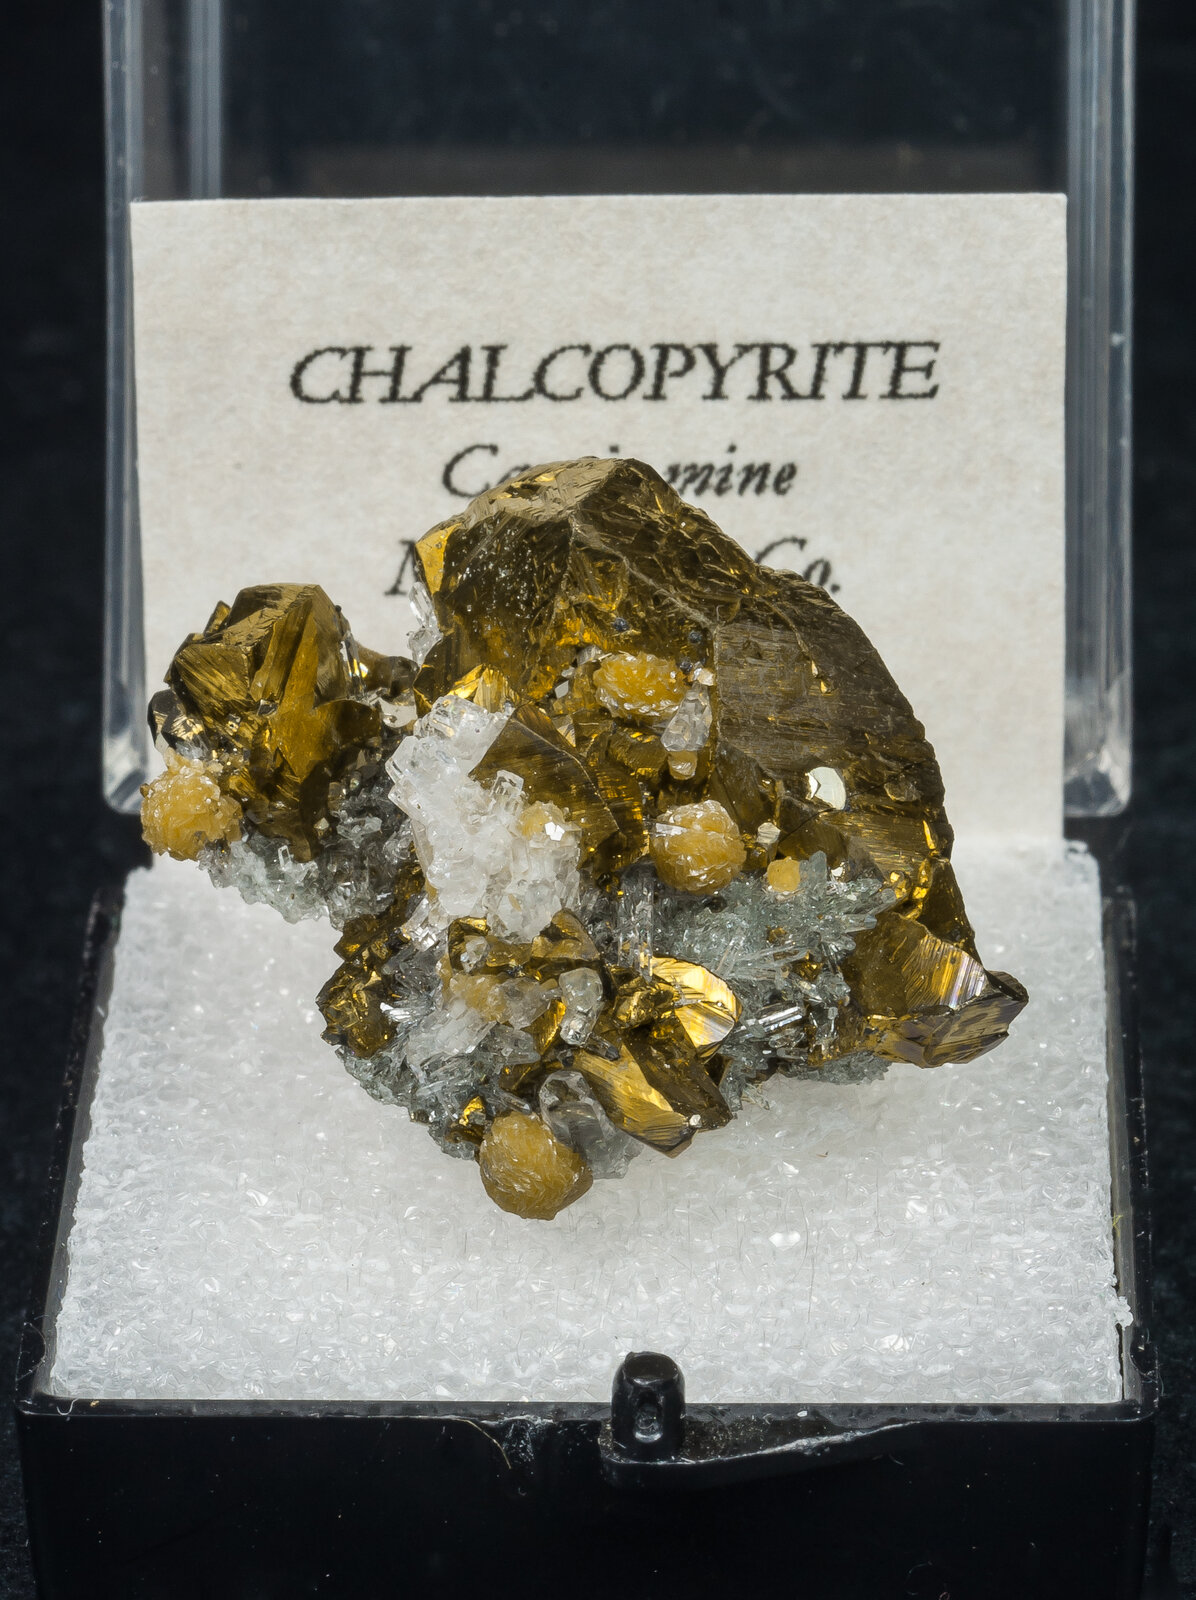 specimens/s_imagesAN7/Chalcopyrite-TBJ14AN7f1.jpg